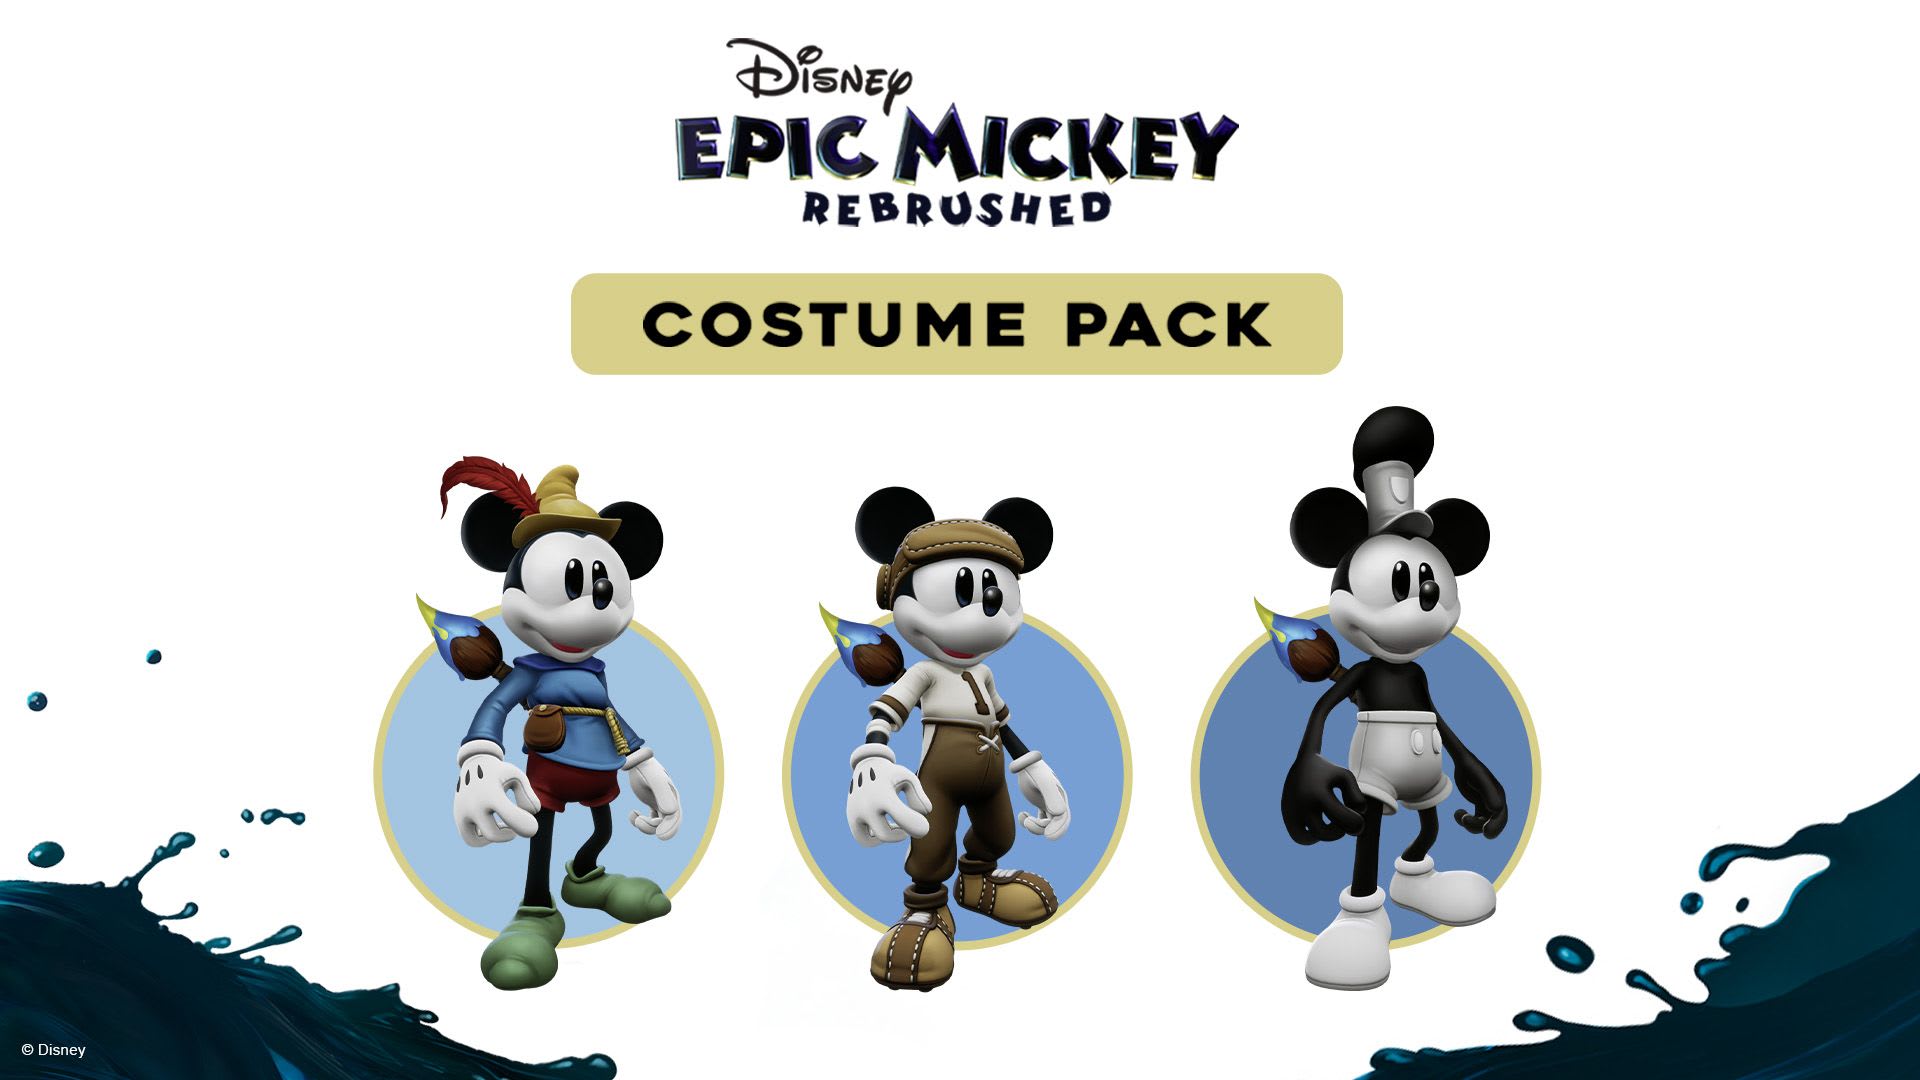 Disney Epic Mickey: Rebrushed - Costume Pack